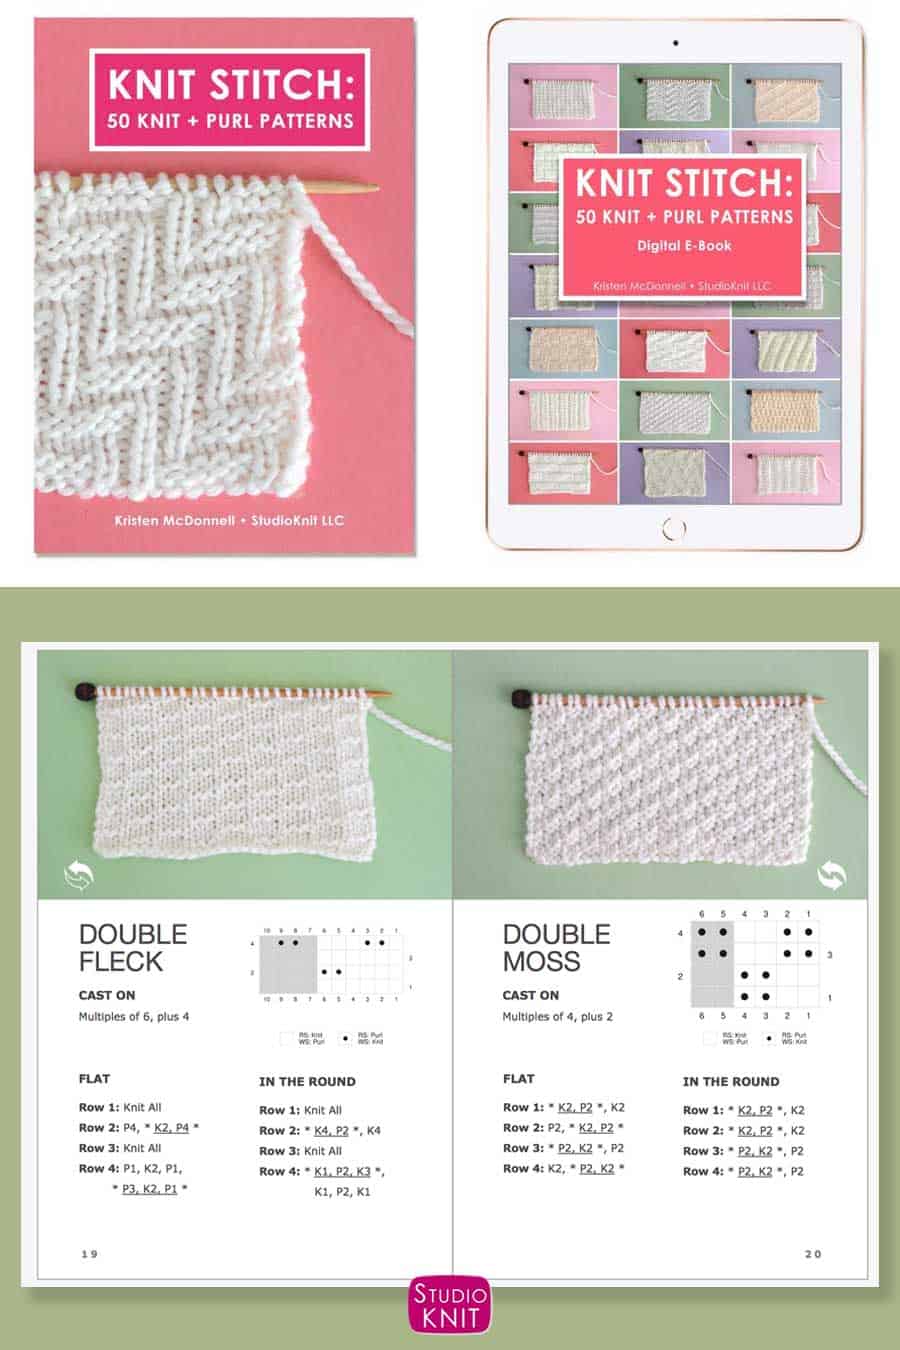 Knit Stitch Pattern Book with Double Moss Stitch Pattern by Studio Knit